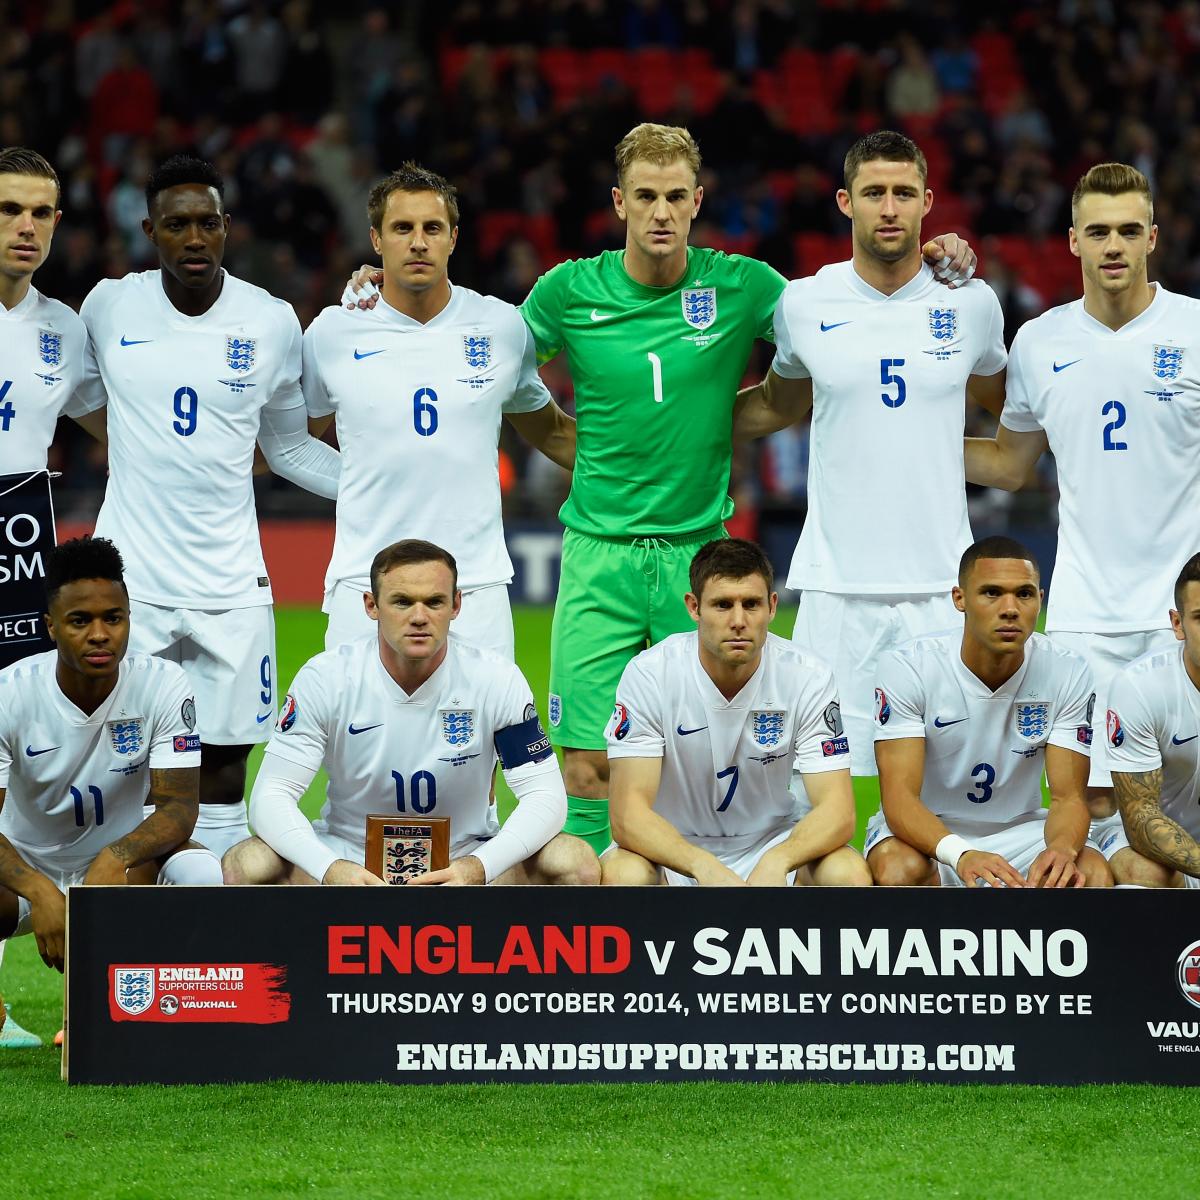 England vs. San Marino: Goals, Highlights from the European Qualifier